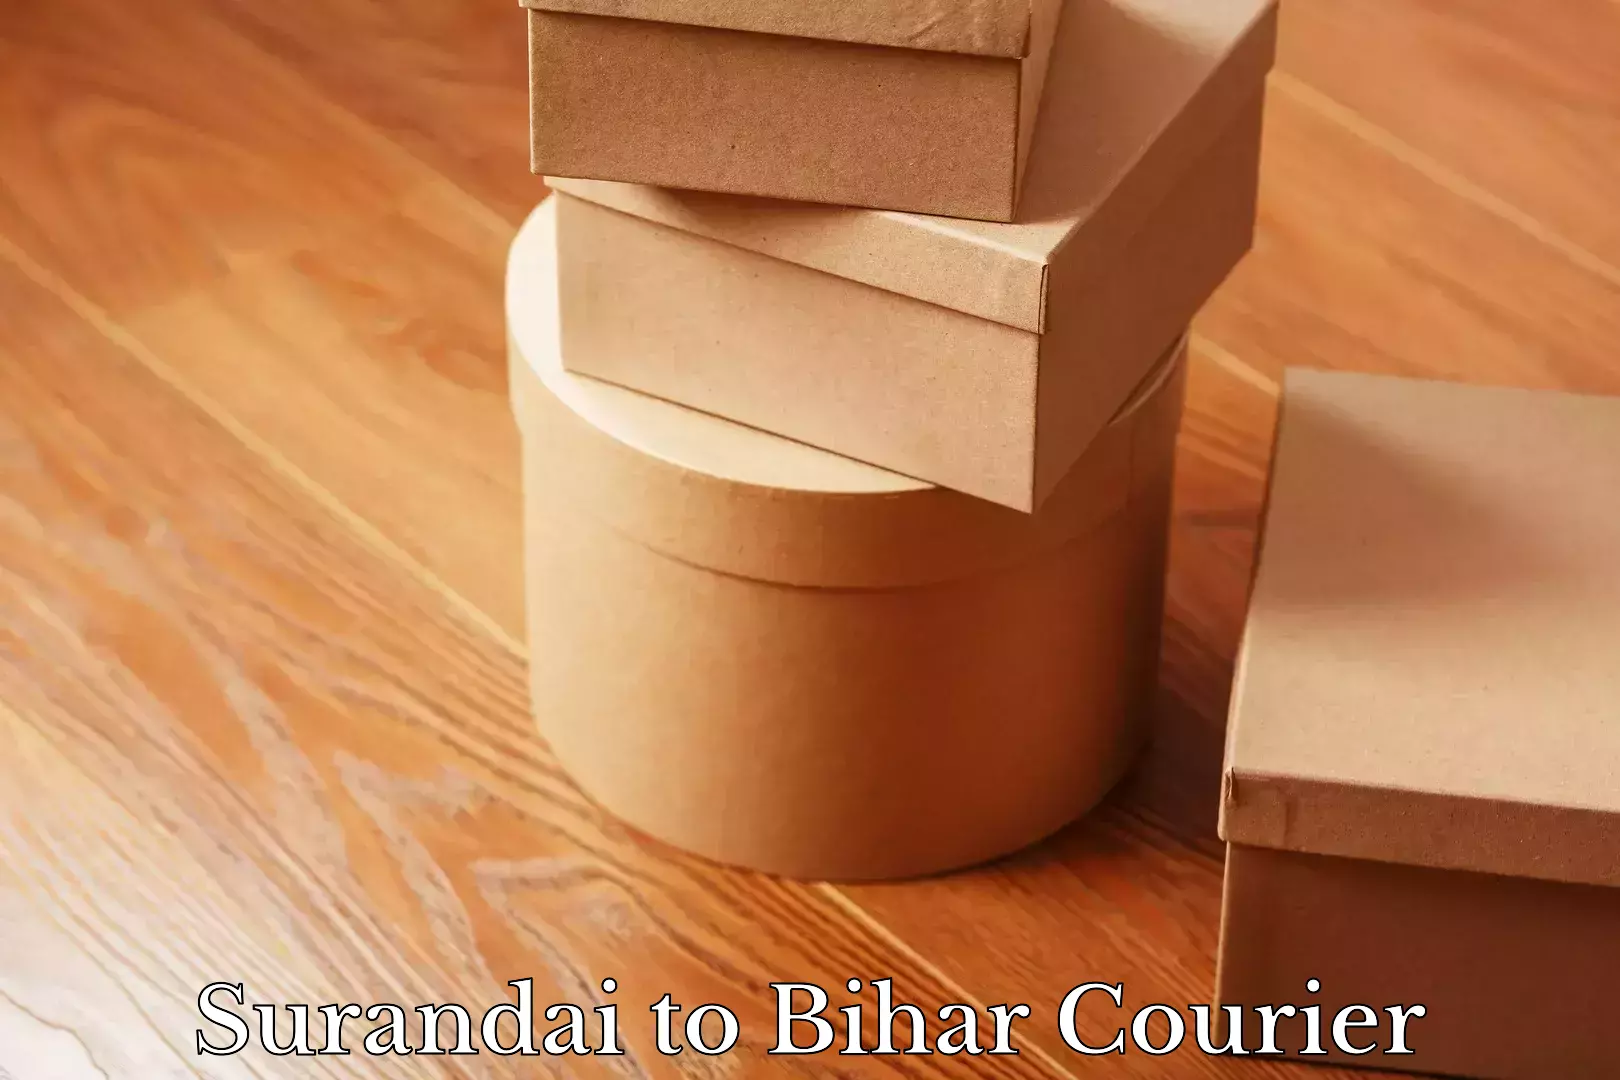 User-friendly delivery service Surandai to Bihar